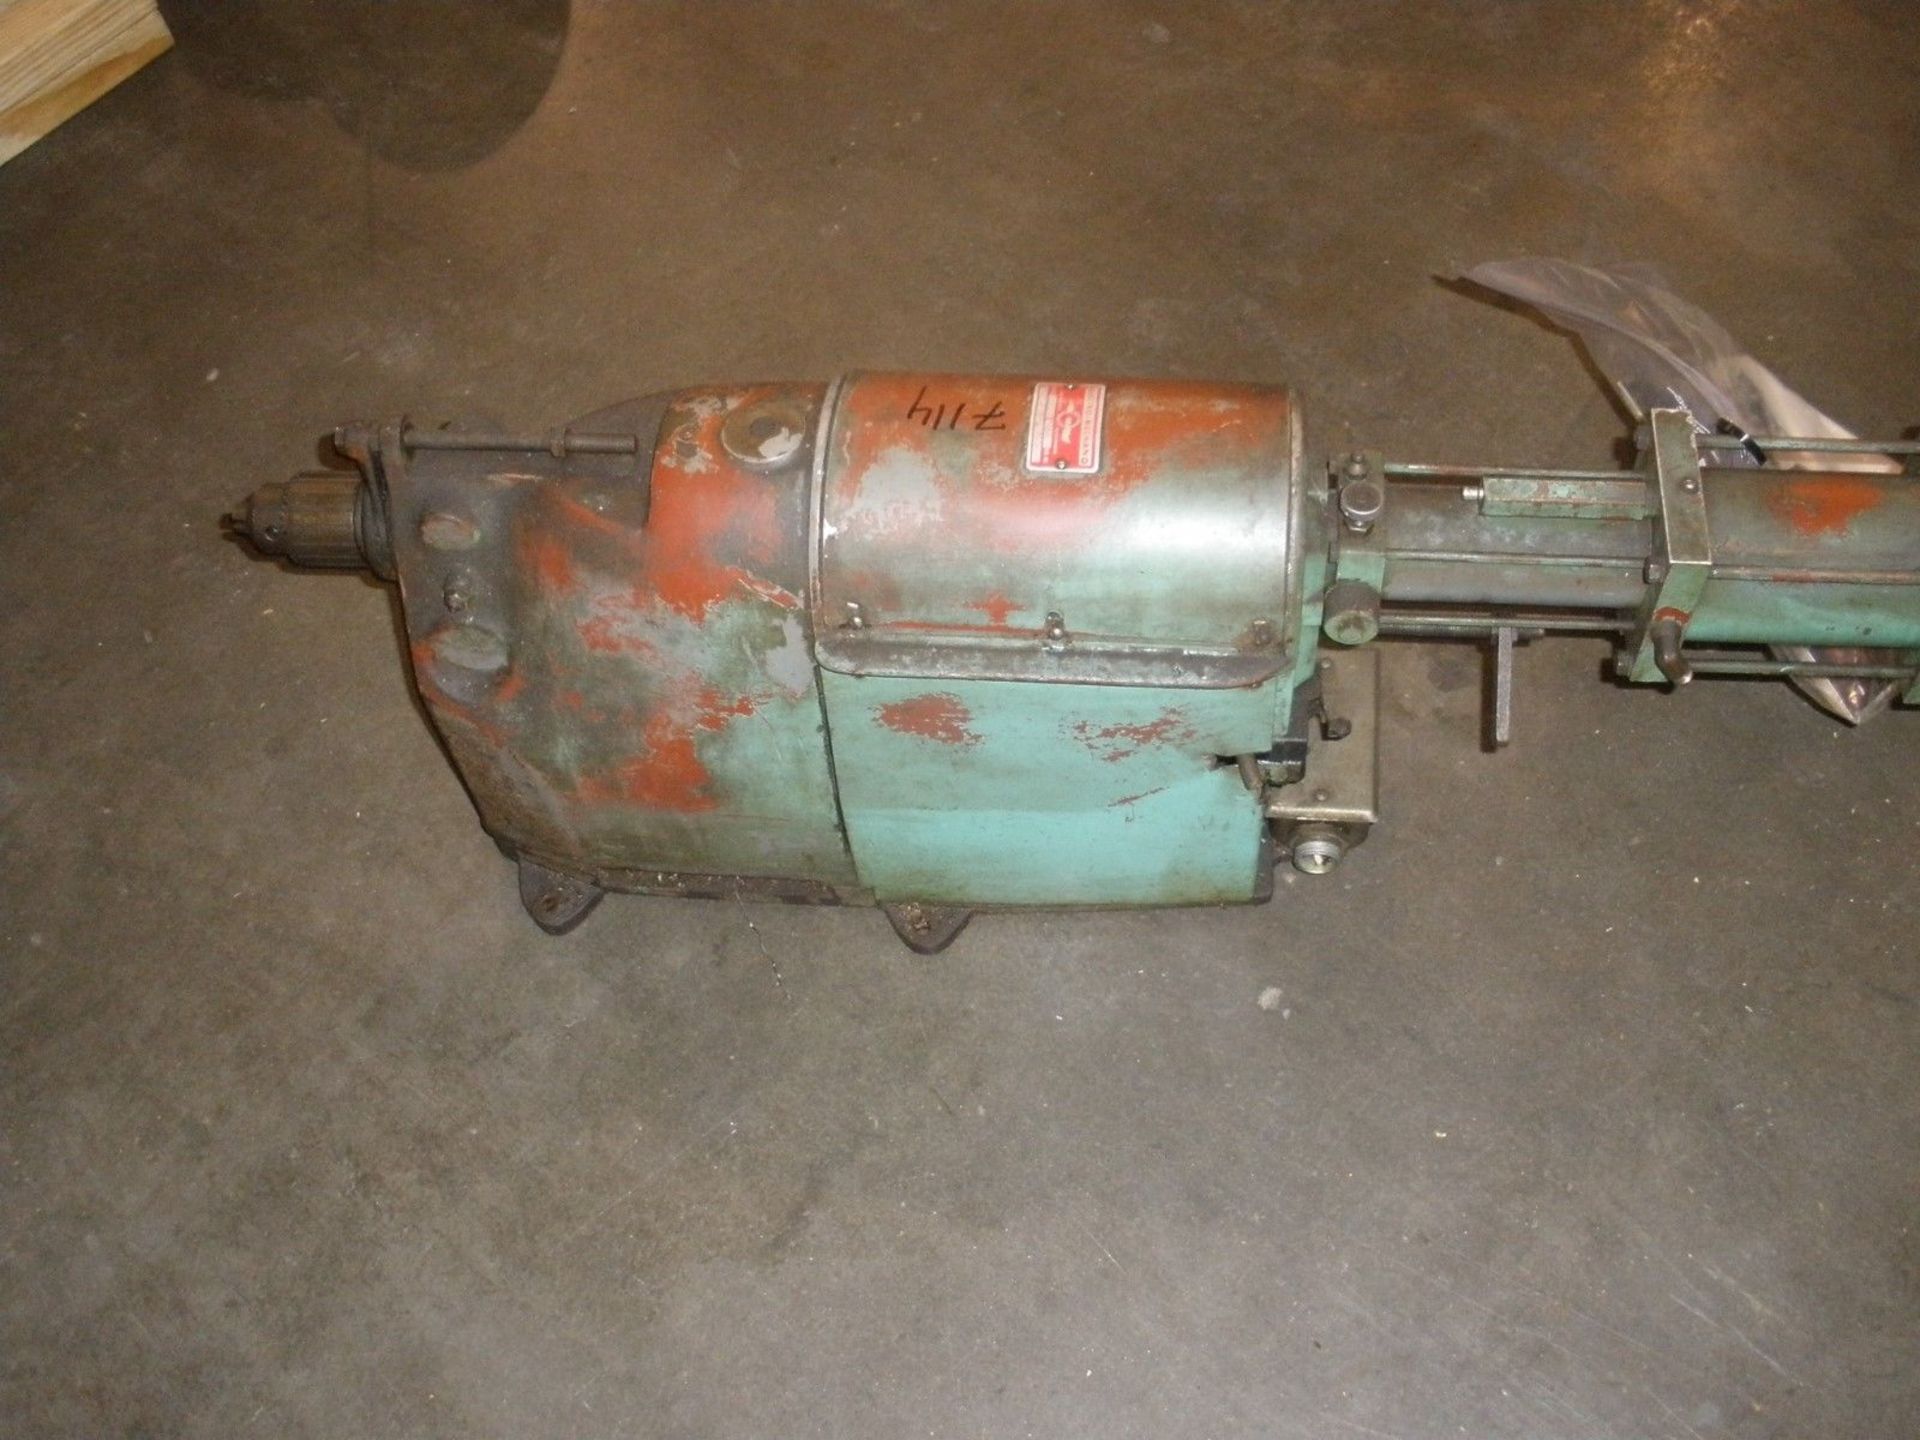 Electro – Mechano Milwaukee Model 603N 220V 3PH Automatic Drilling Head - Image 2 of 4